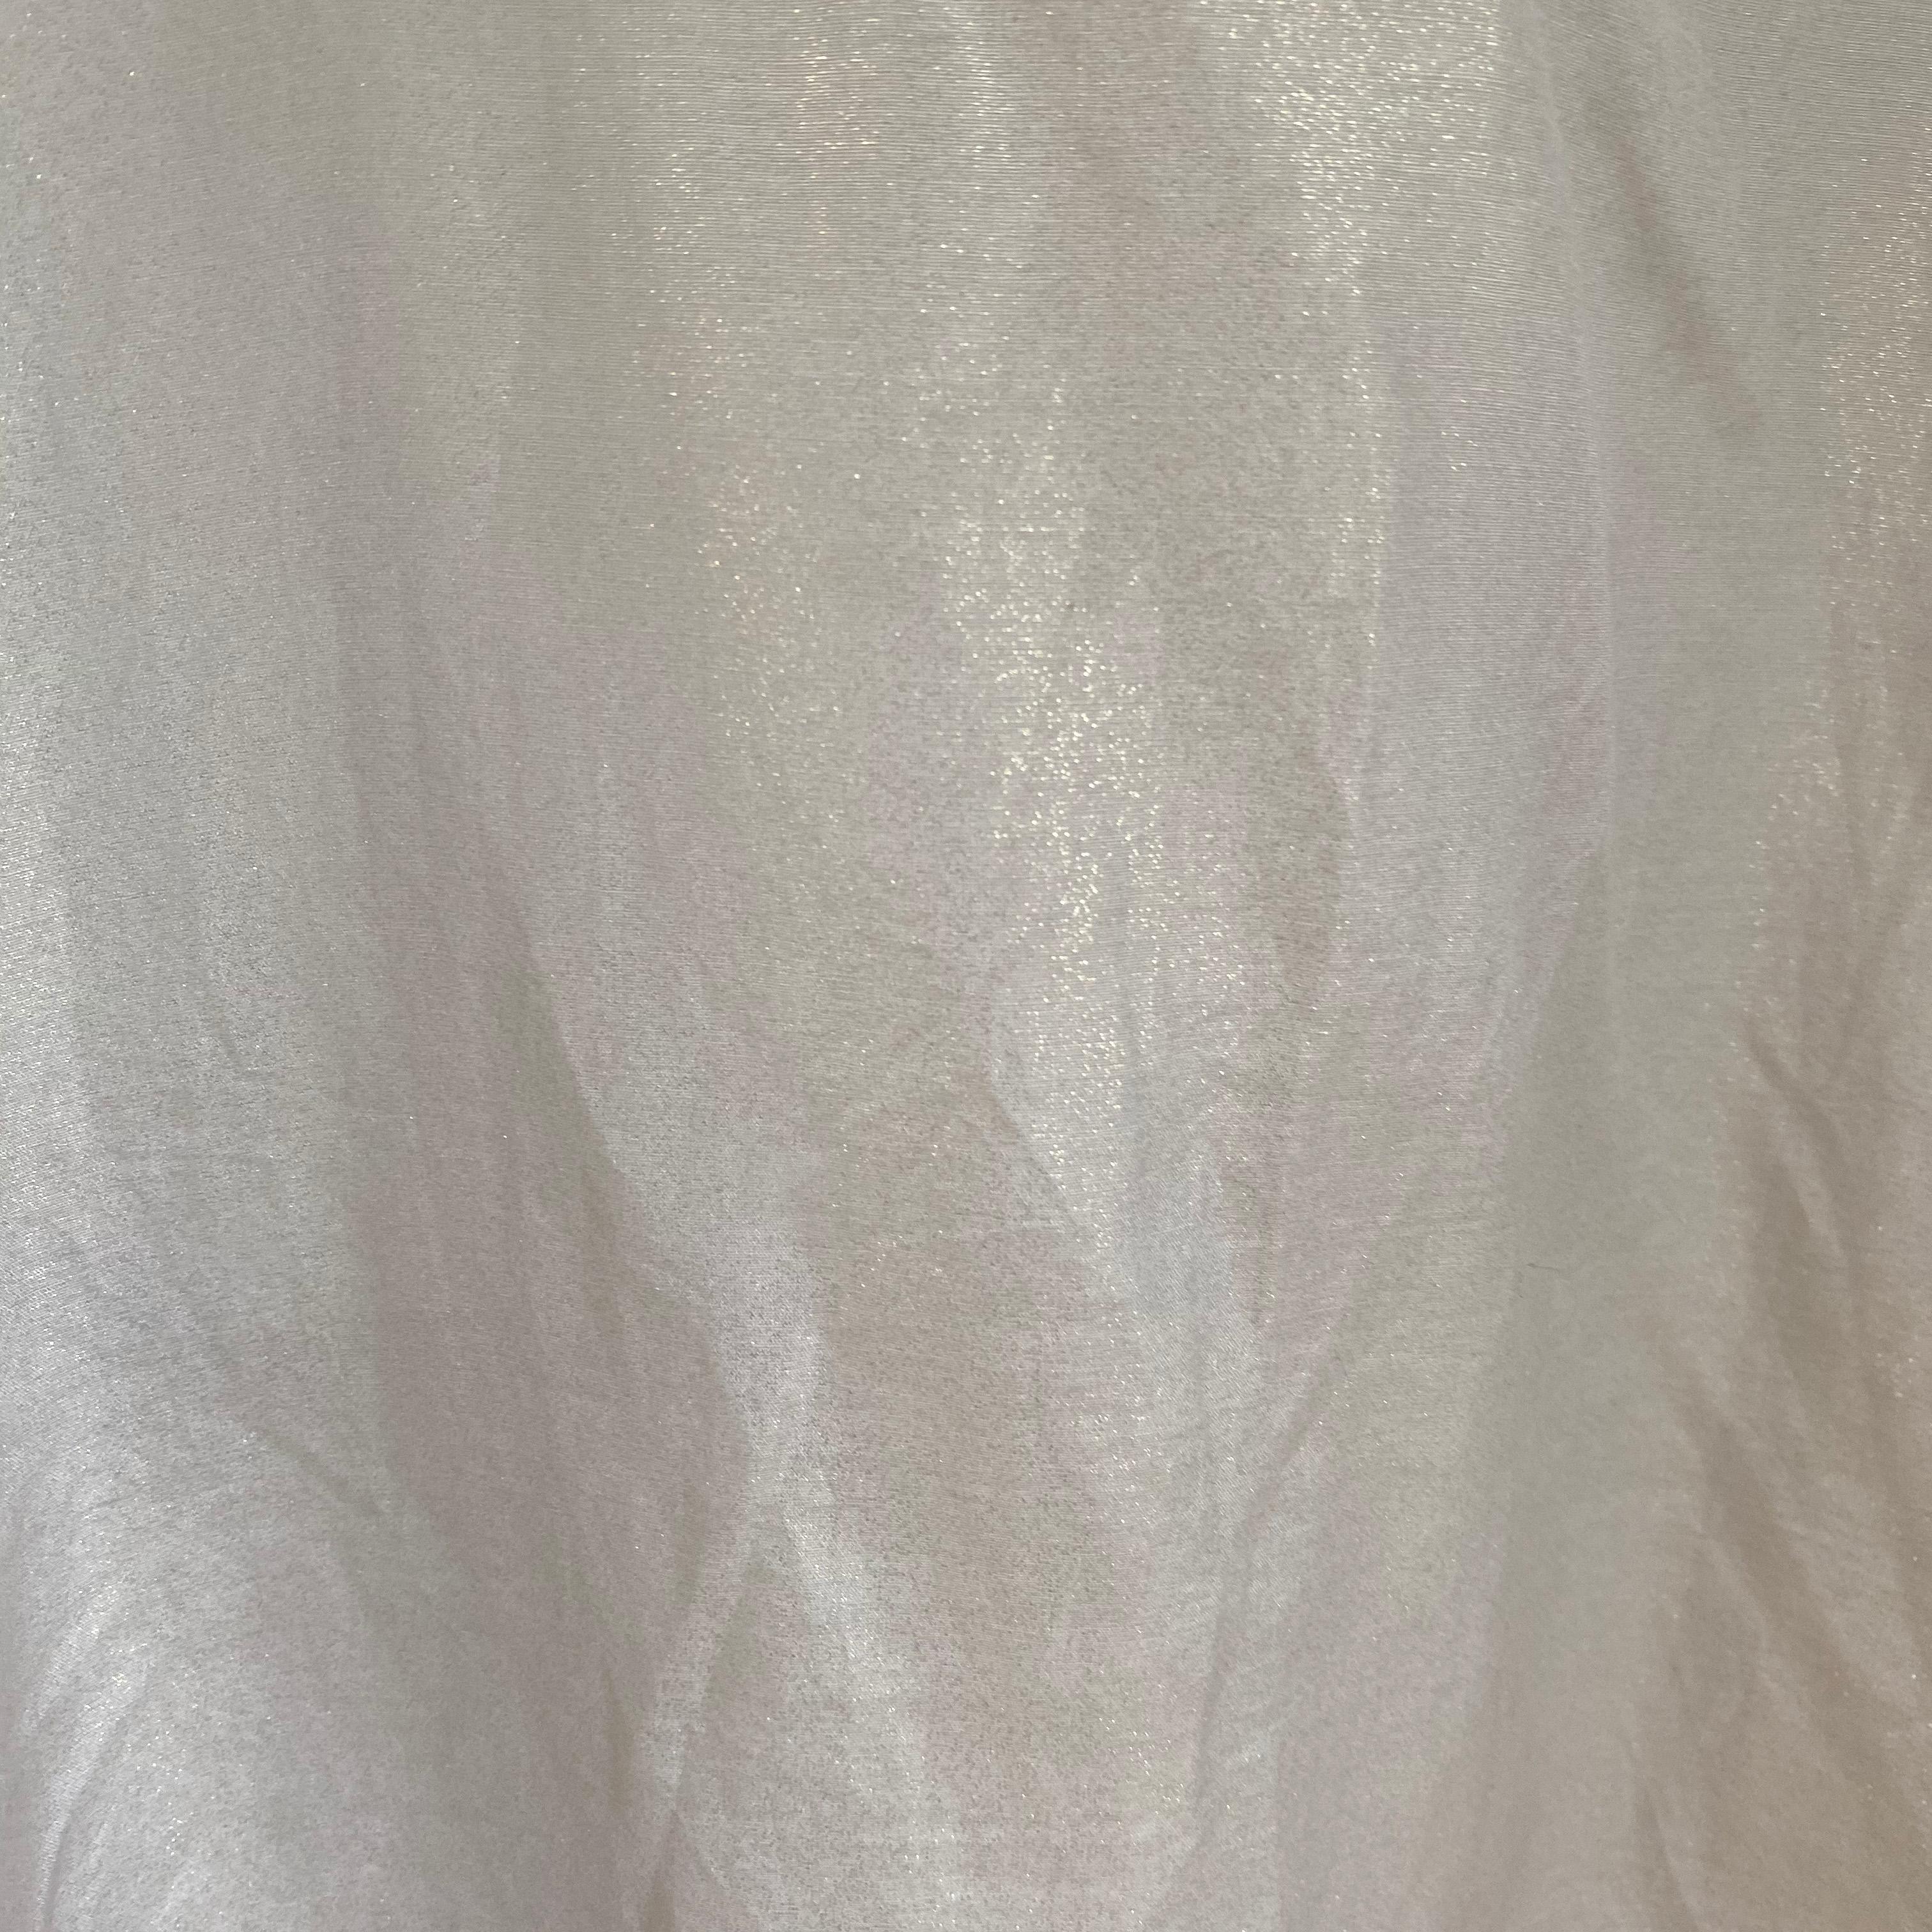 Glodwash over gray silk gossamer tunic shirt dress - NWT For Sale 1